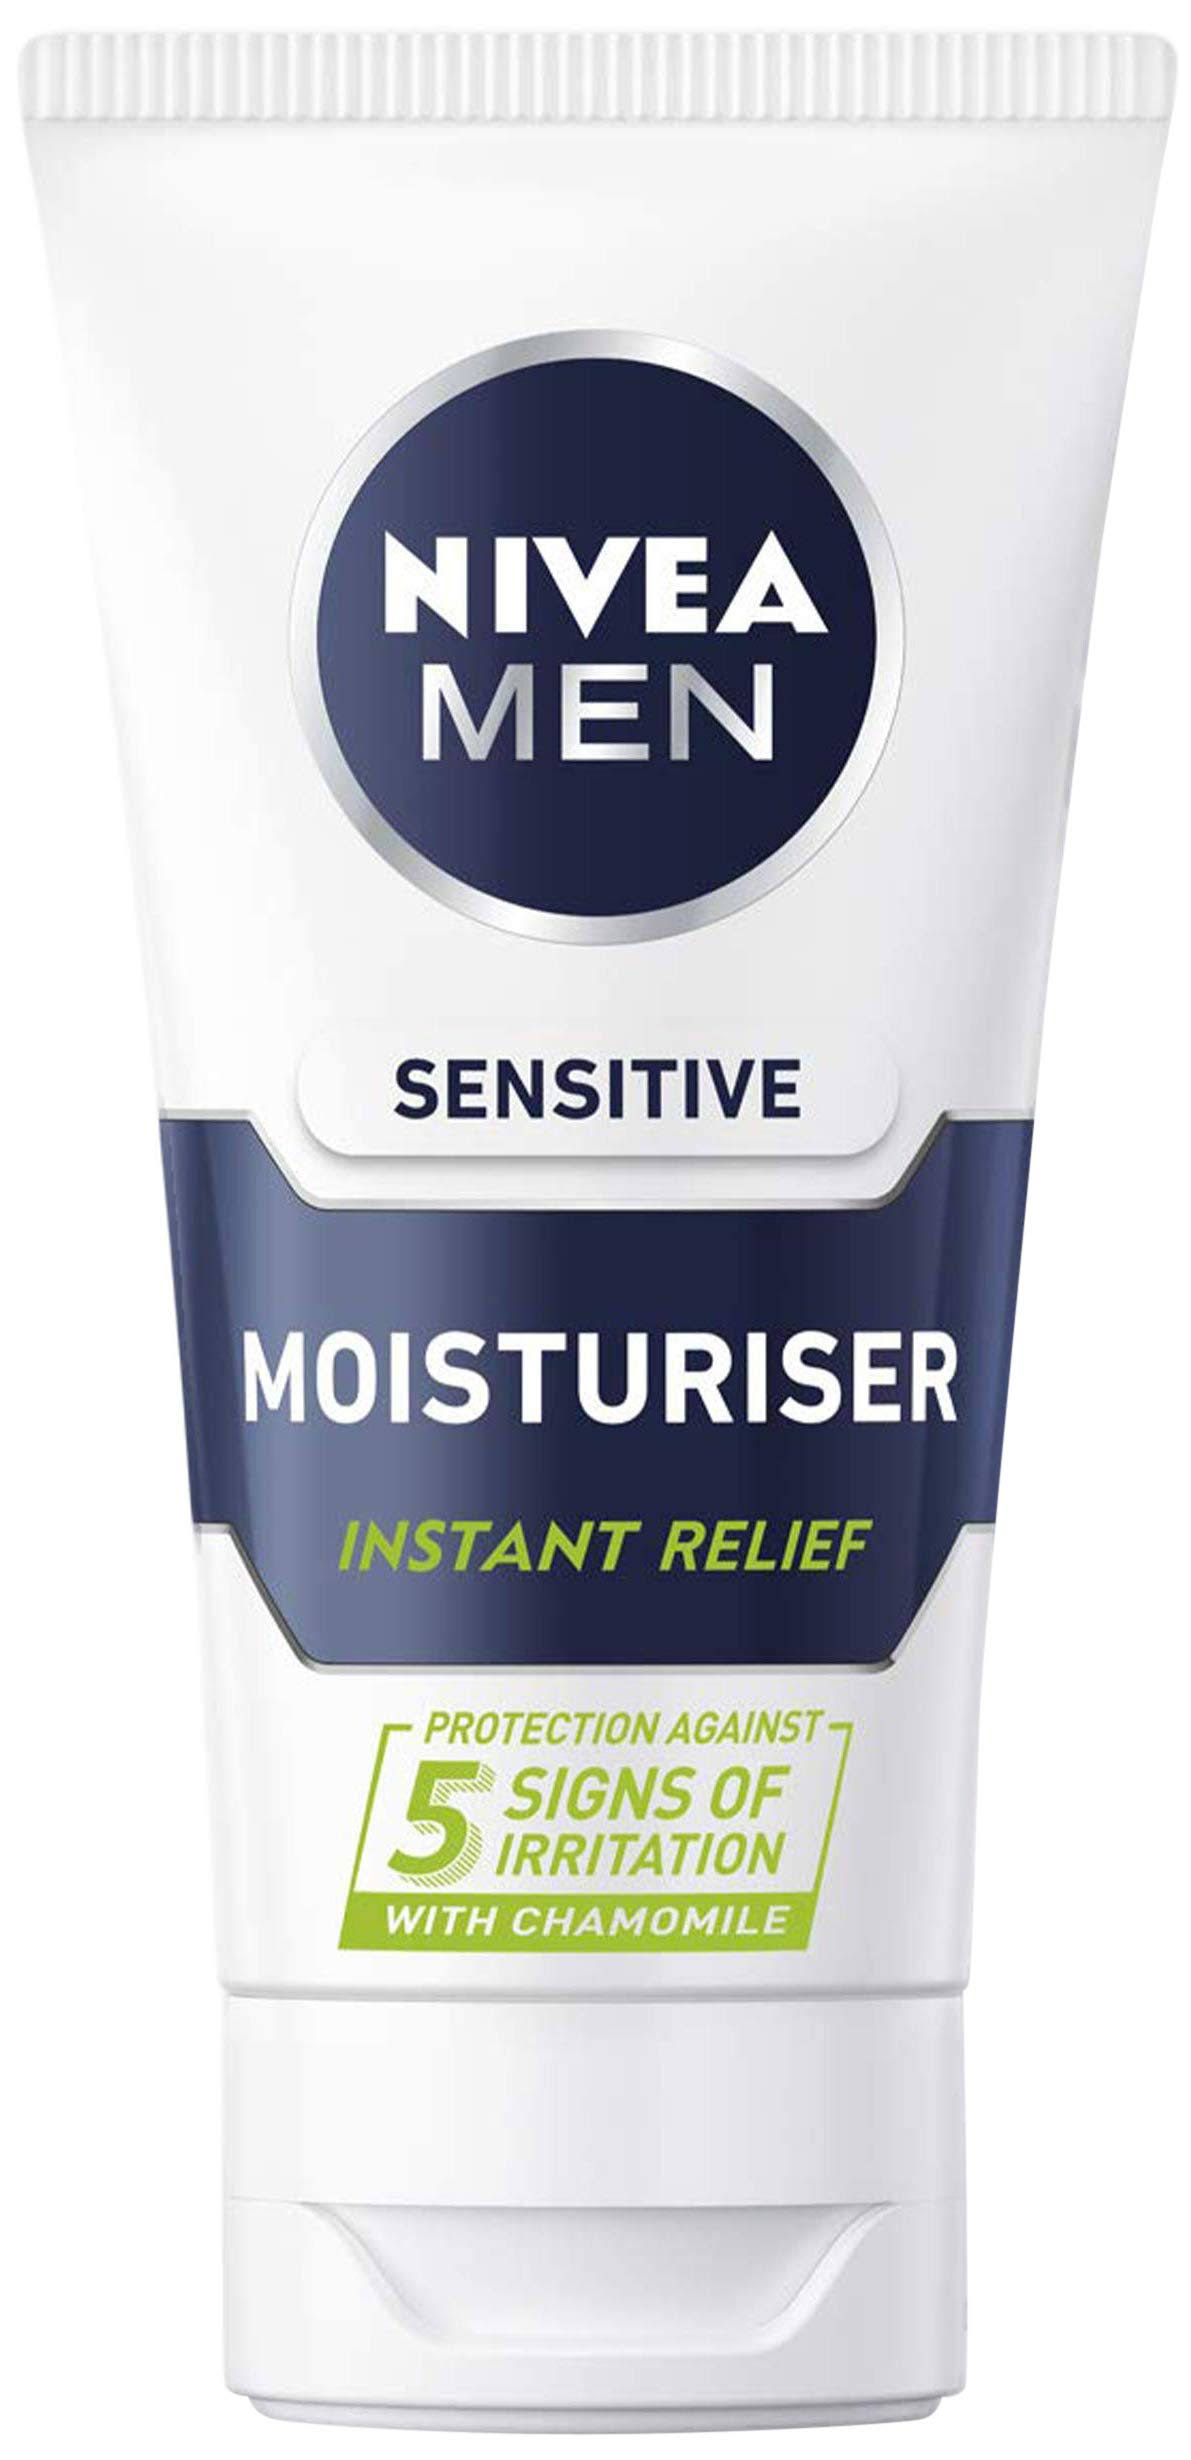 Nivea Men Moisturiser - Sensitive, 75ml